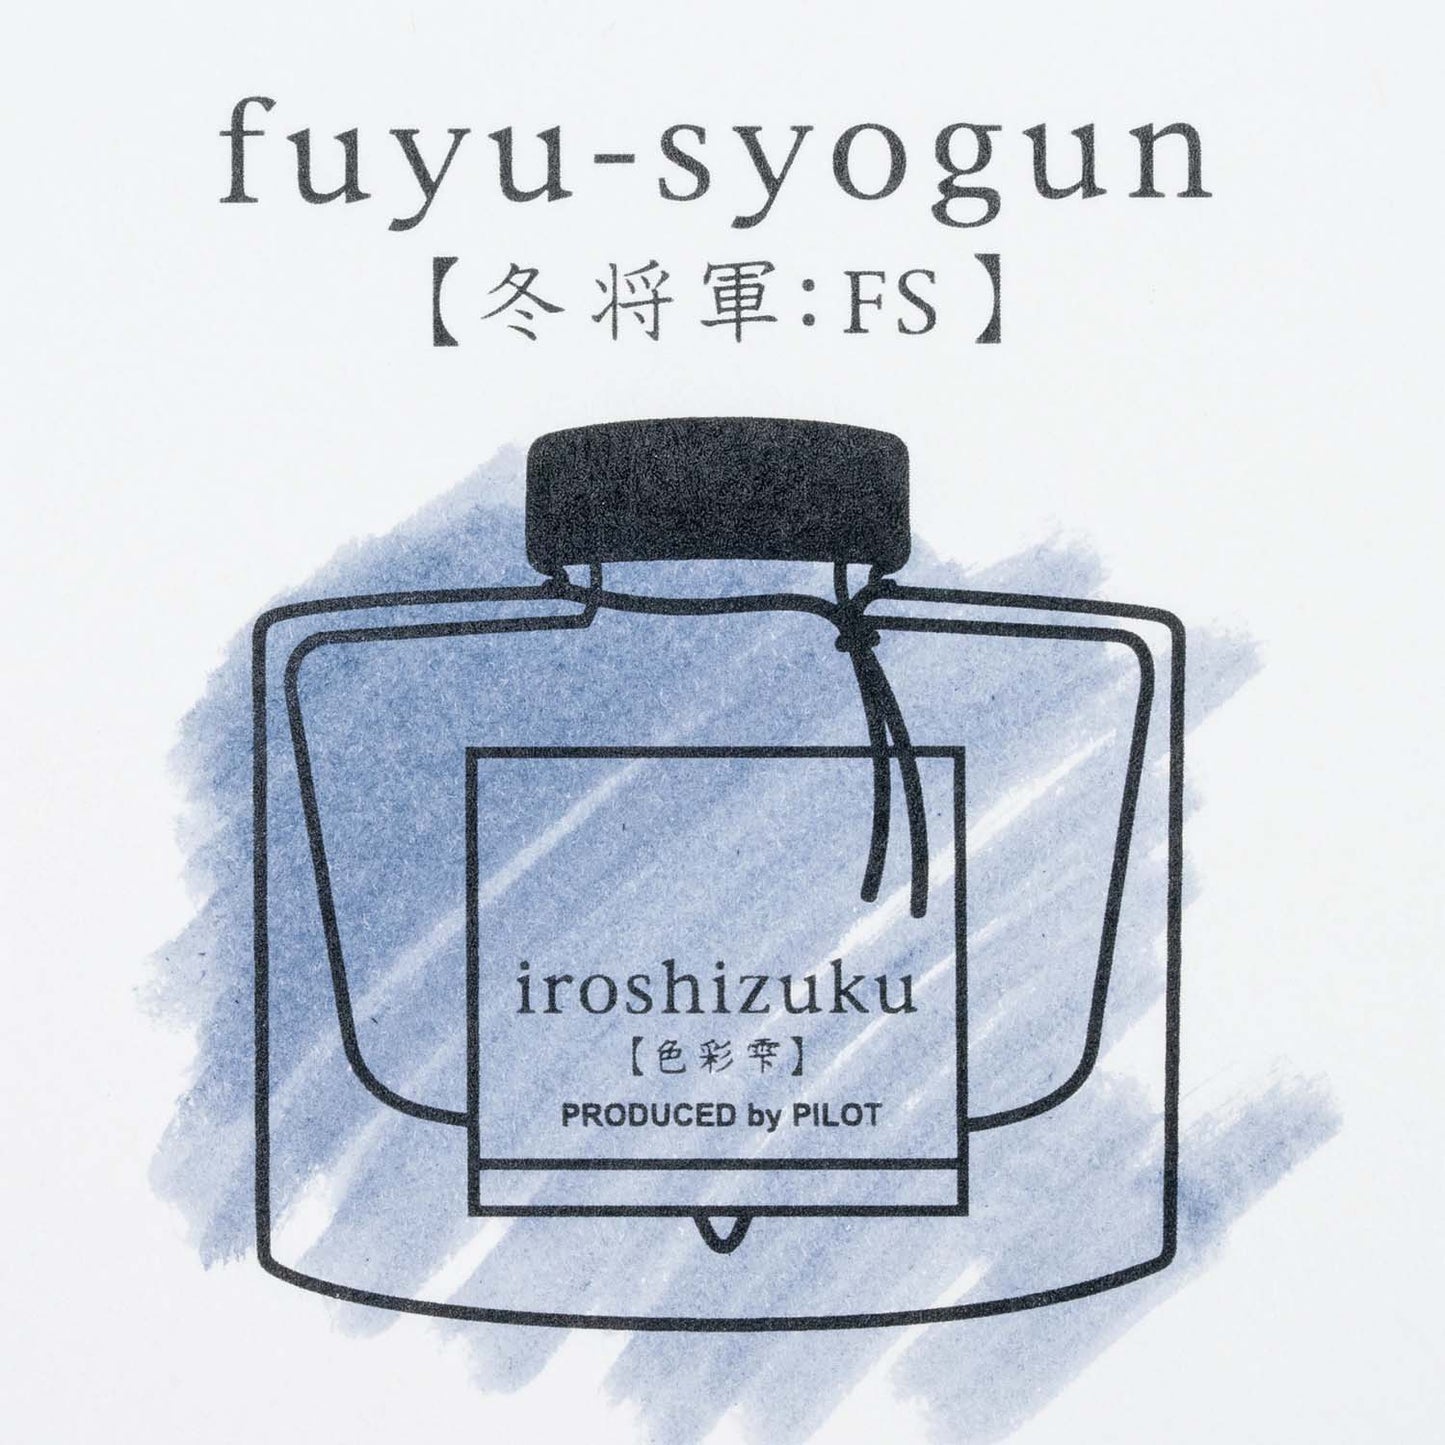 Pilot Iroshizuku Fountain Pen Ink - Fuyu-syogun (Rigor of Winter) gray sample